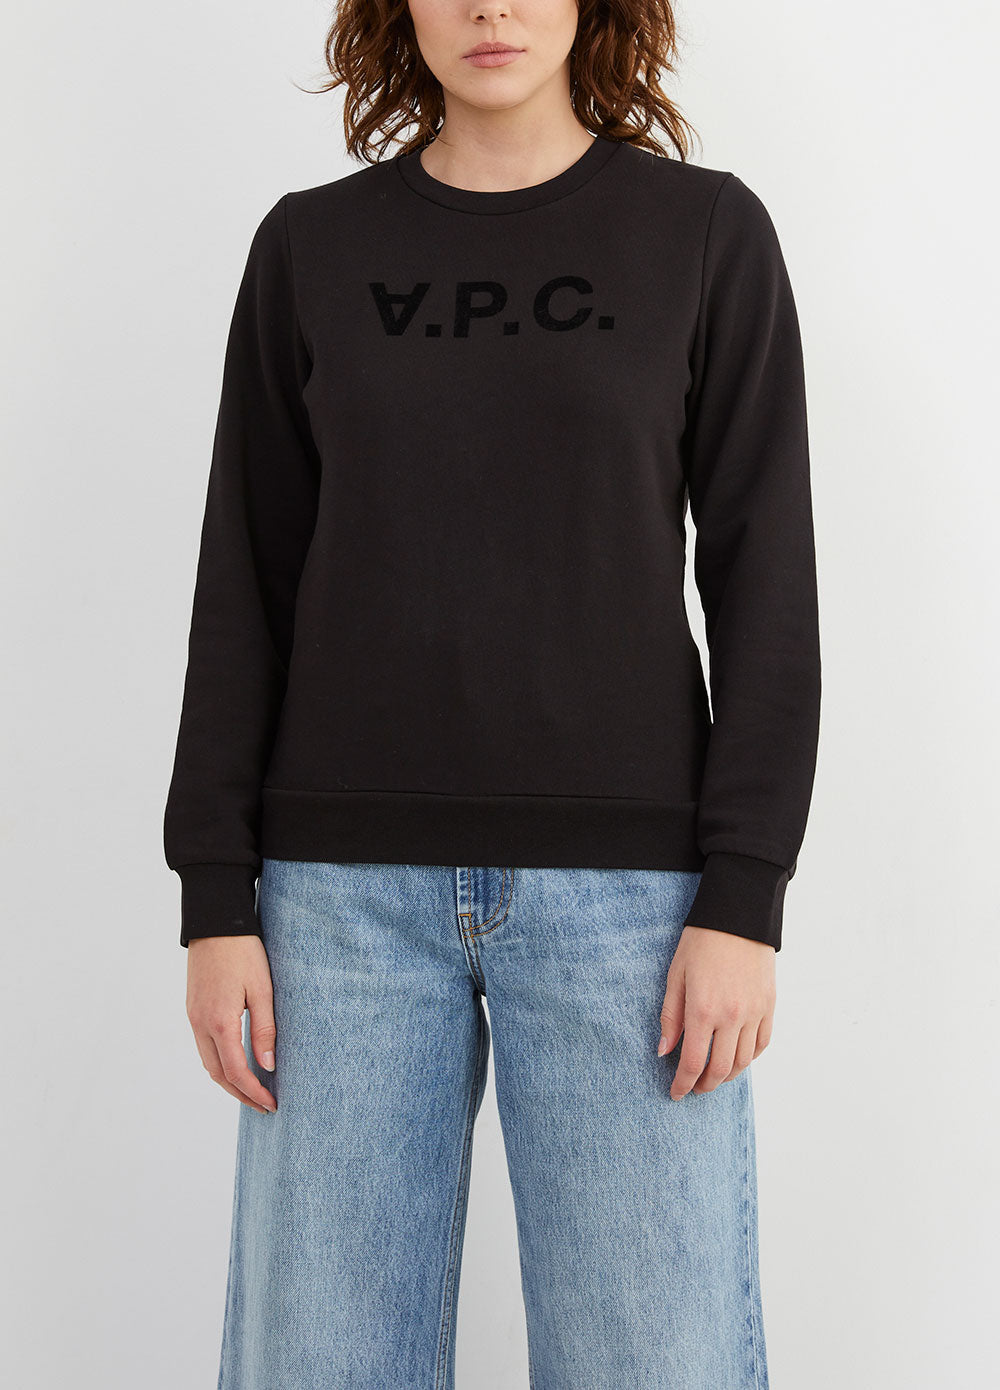 Viva V.P.C. Sweatshirt